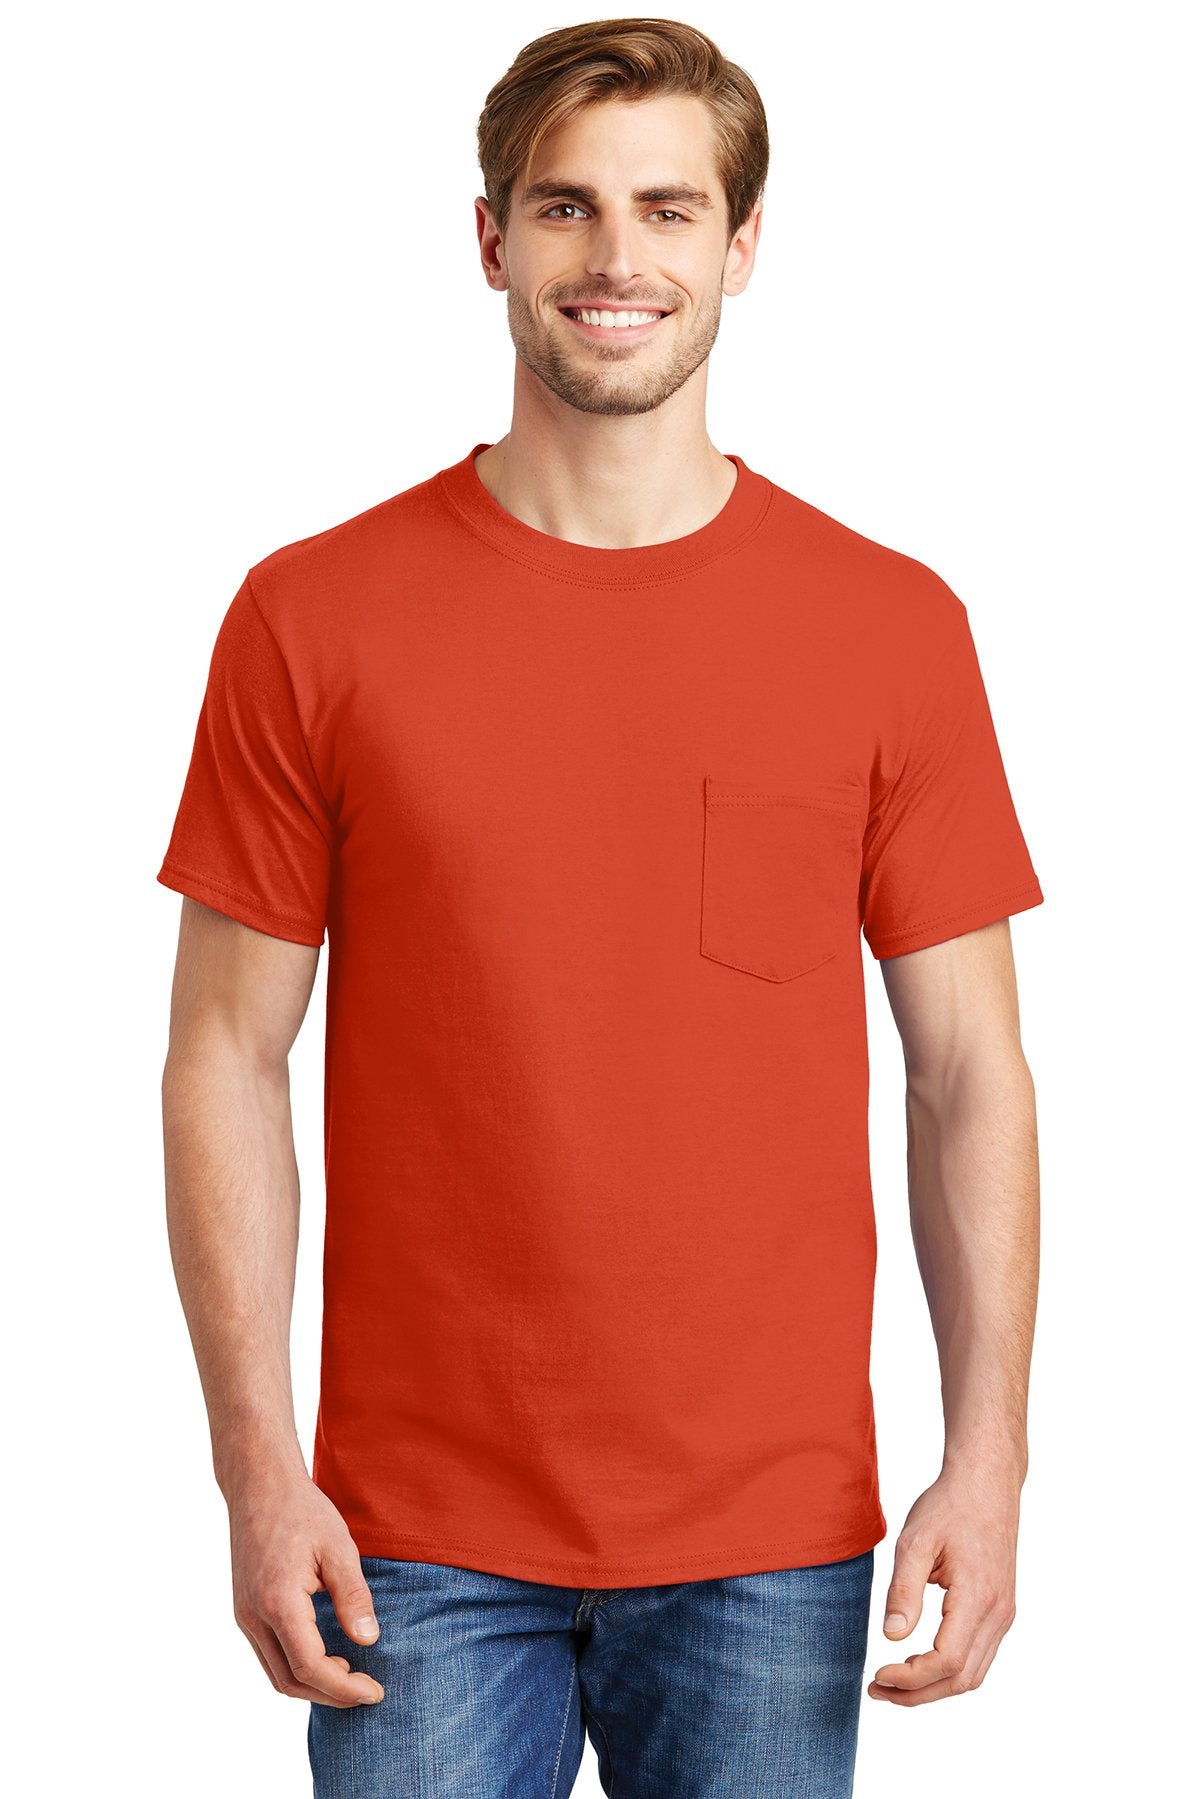 hanes beefy cotton t shirt with pocket 5190 orange